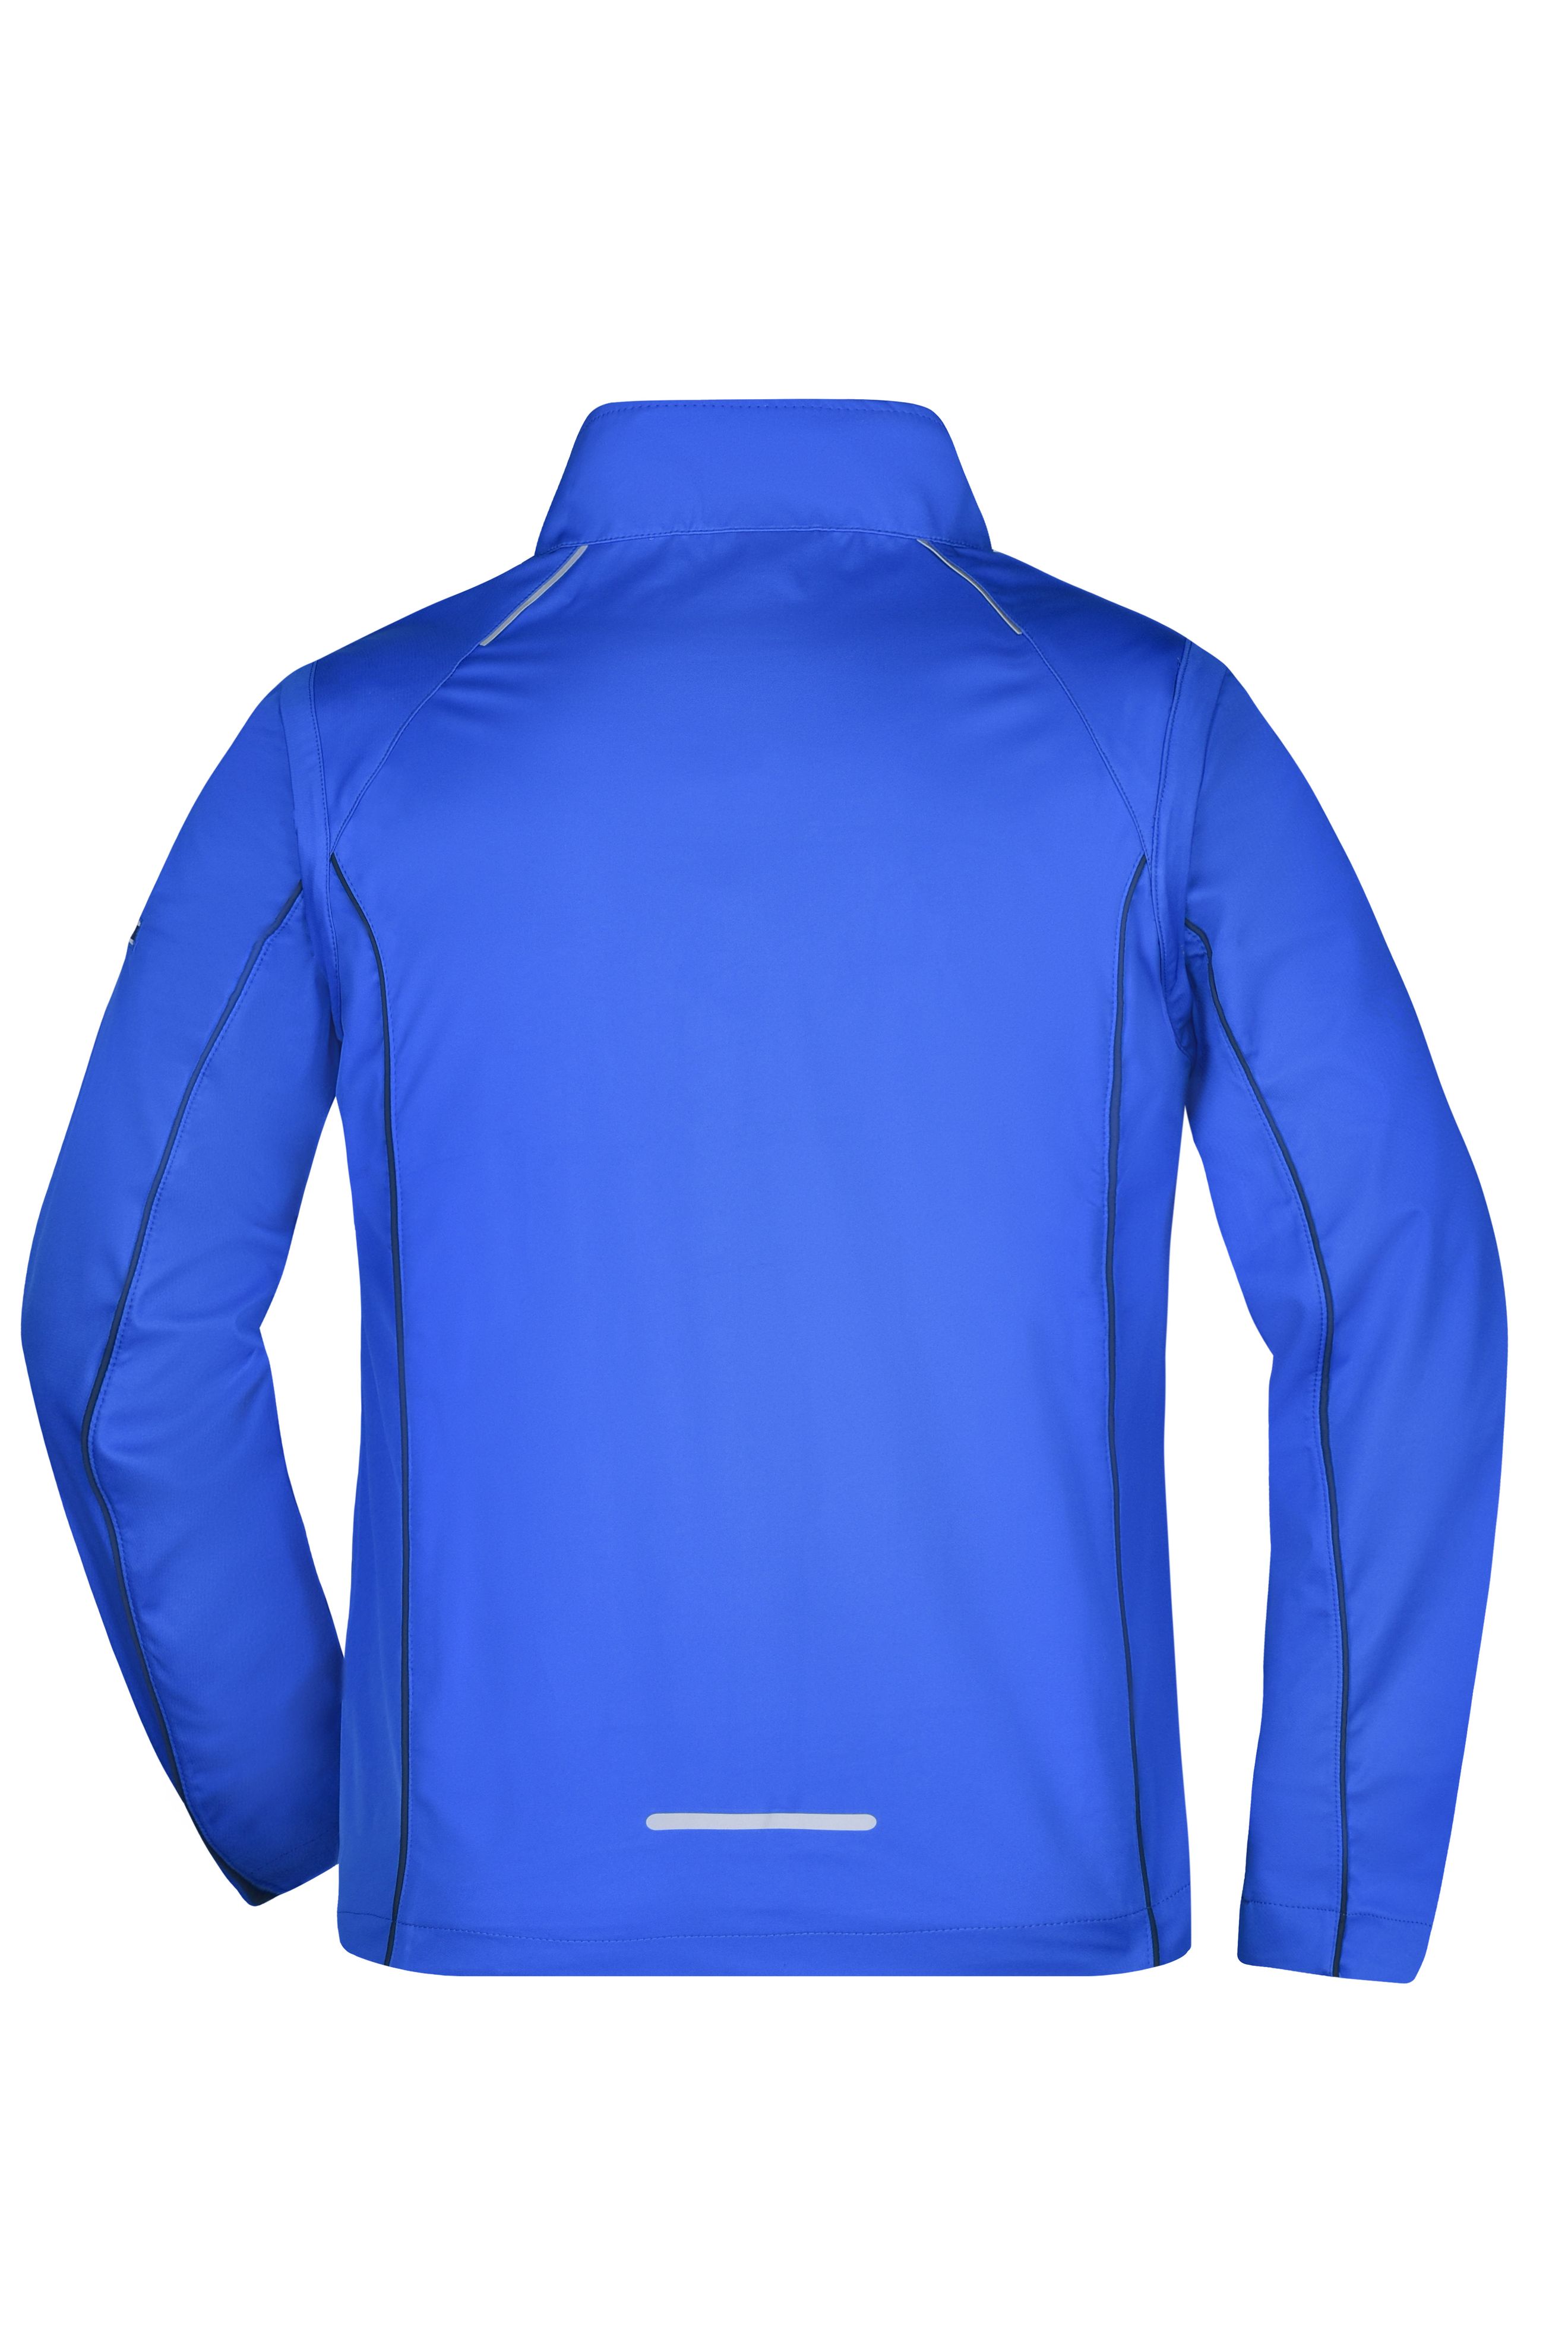 Men Men's Zip-Off Softshell Jacket Nautic-blue/navy-Daiber